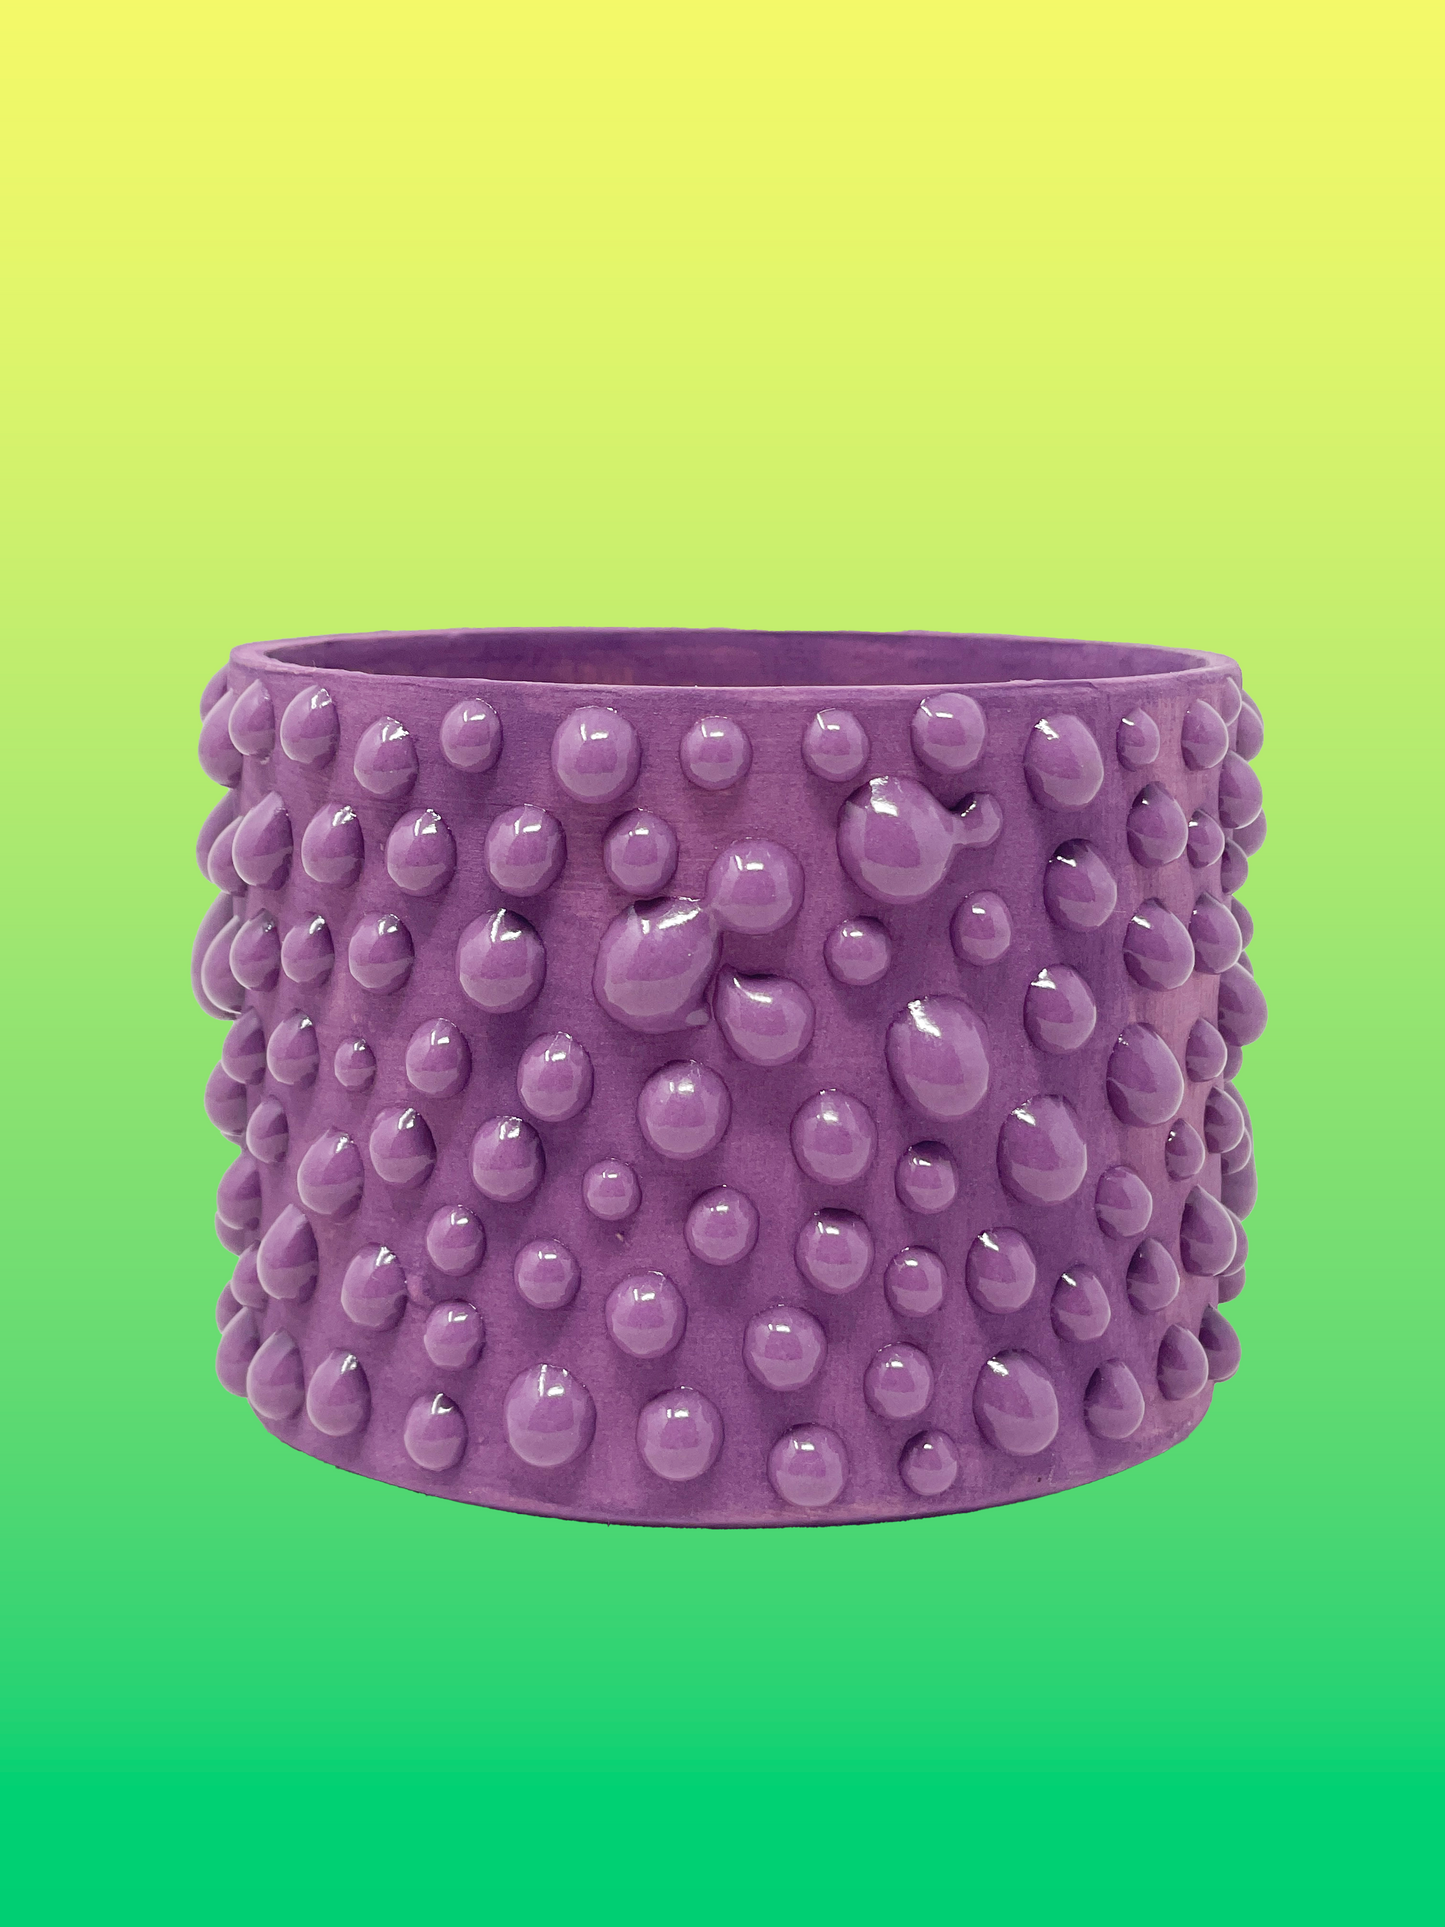 pottery glaze goop gloop purple